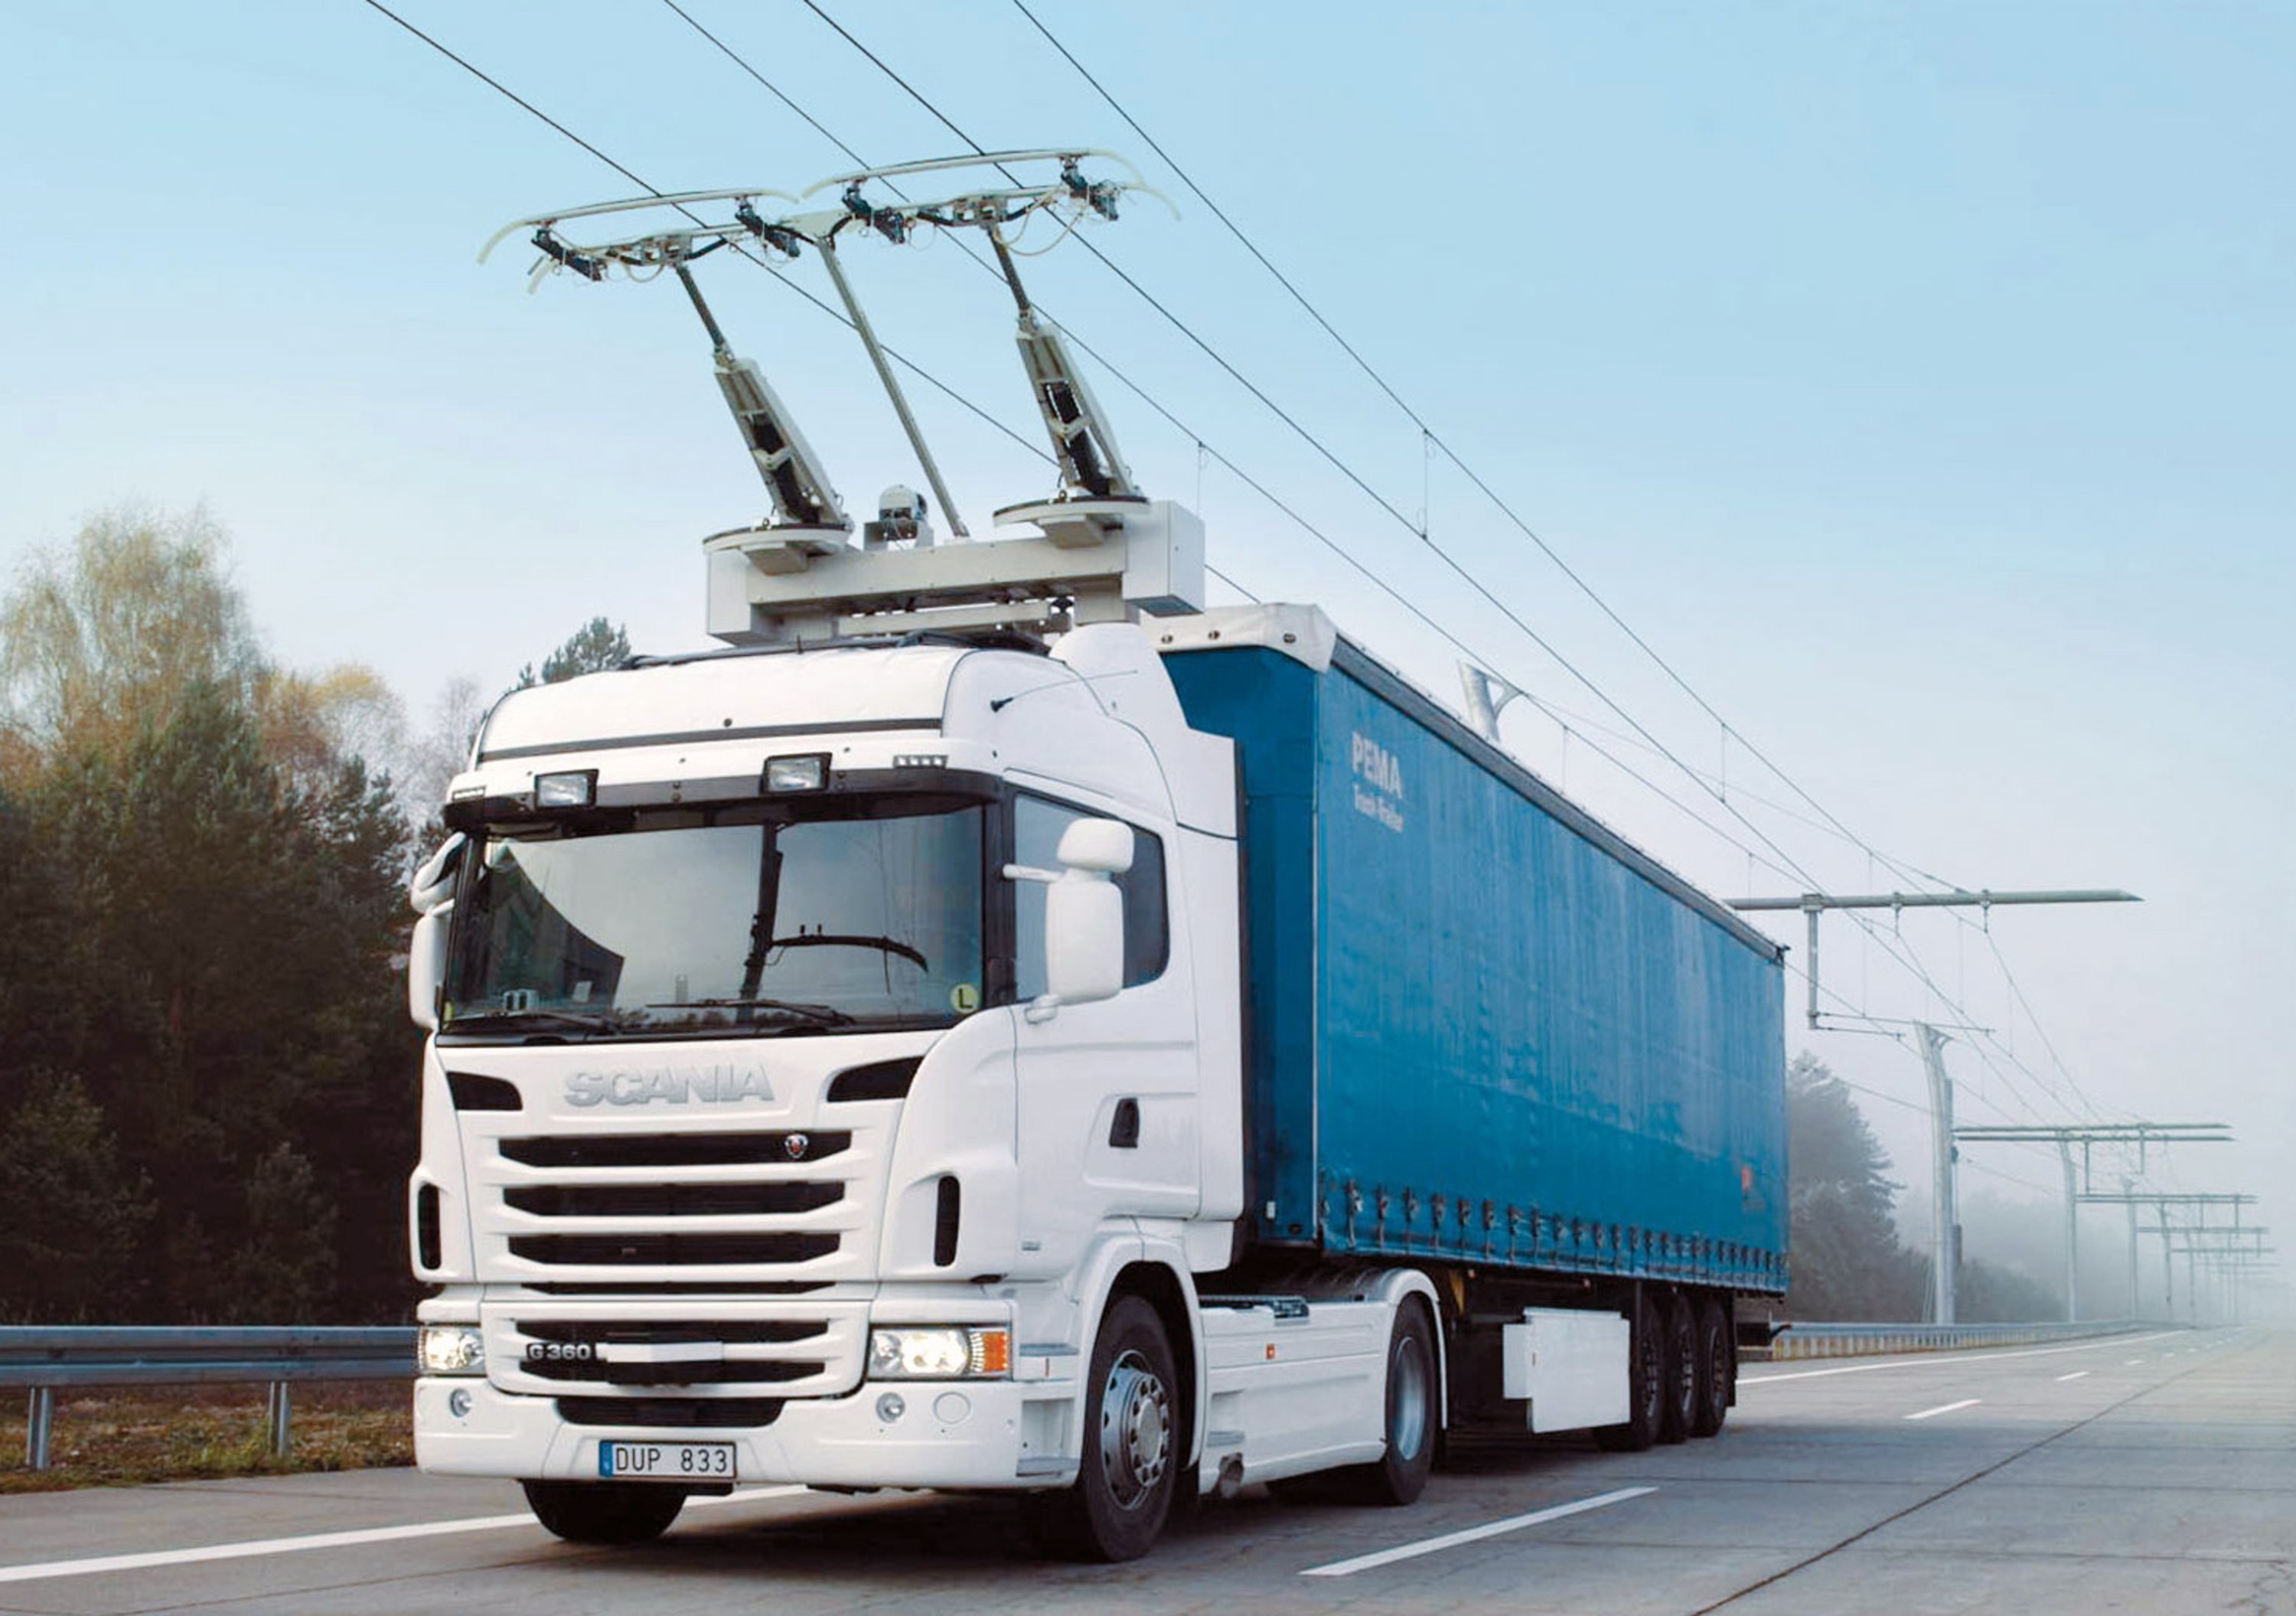 Scania e Siemens: test sulla prima autostrada elettrica per i mezzi pesanti